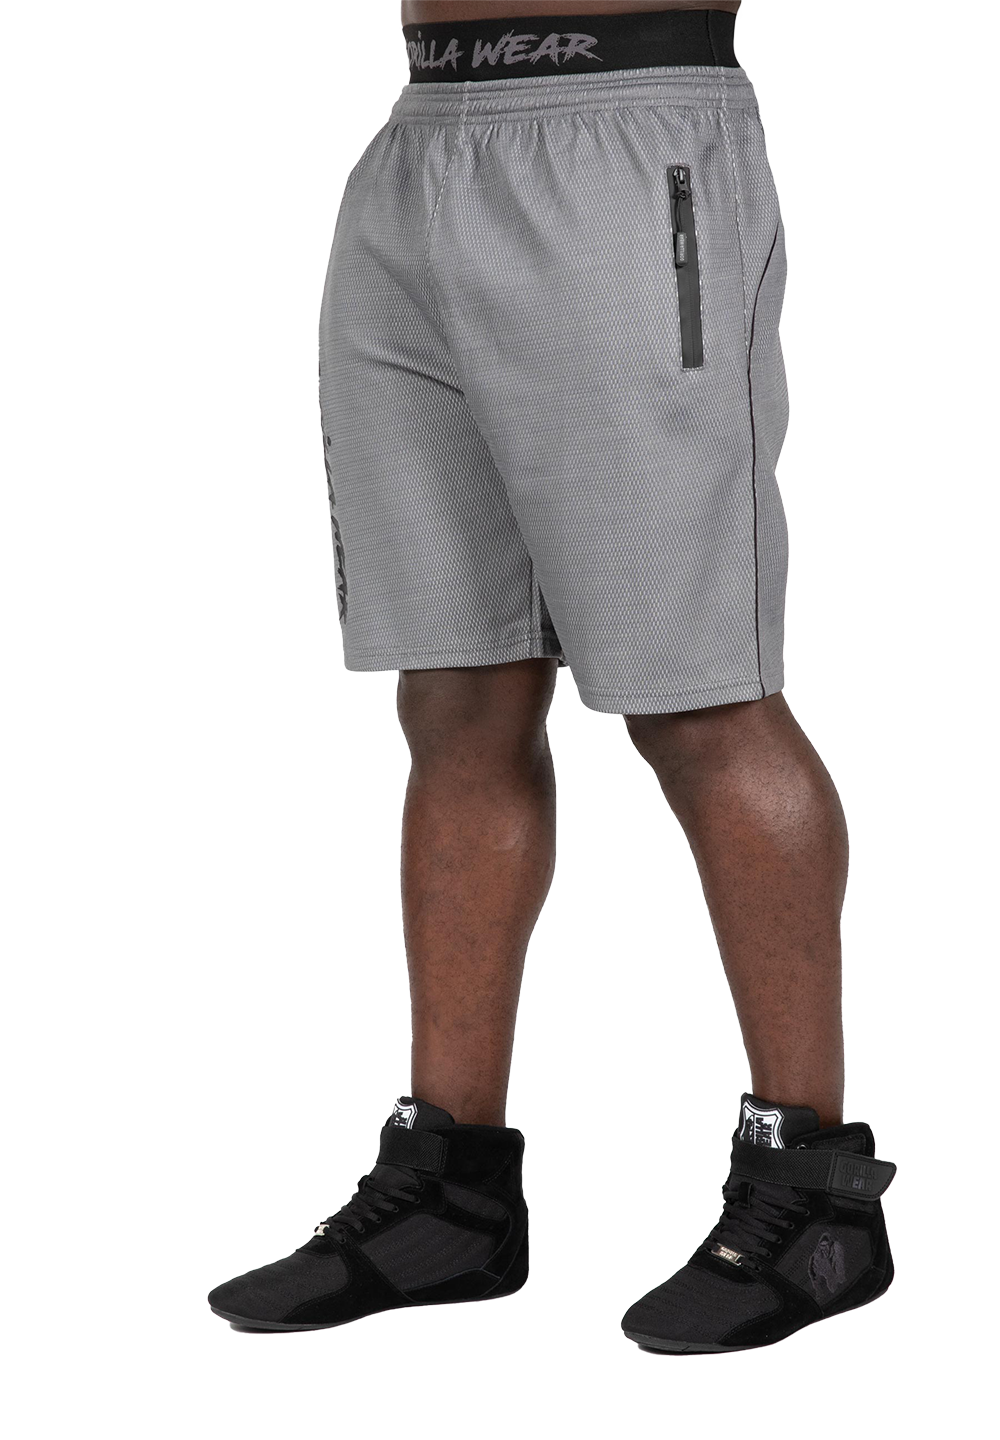 Шорты Mercury Mesh Shorts – Gray/Black от Gorilla Wear